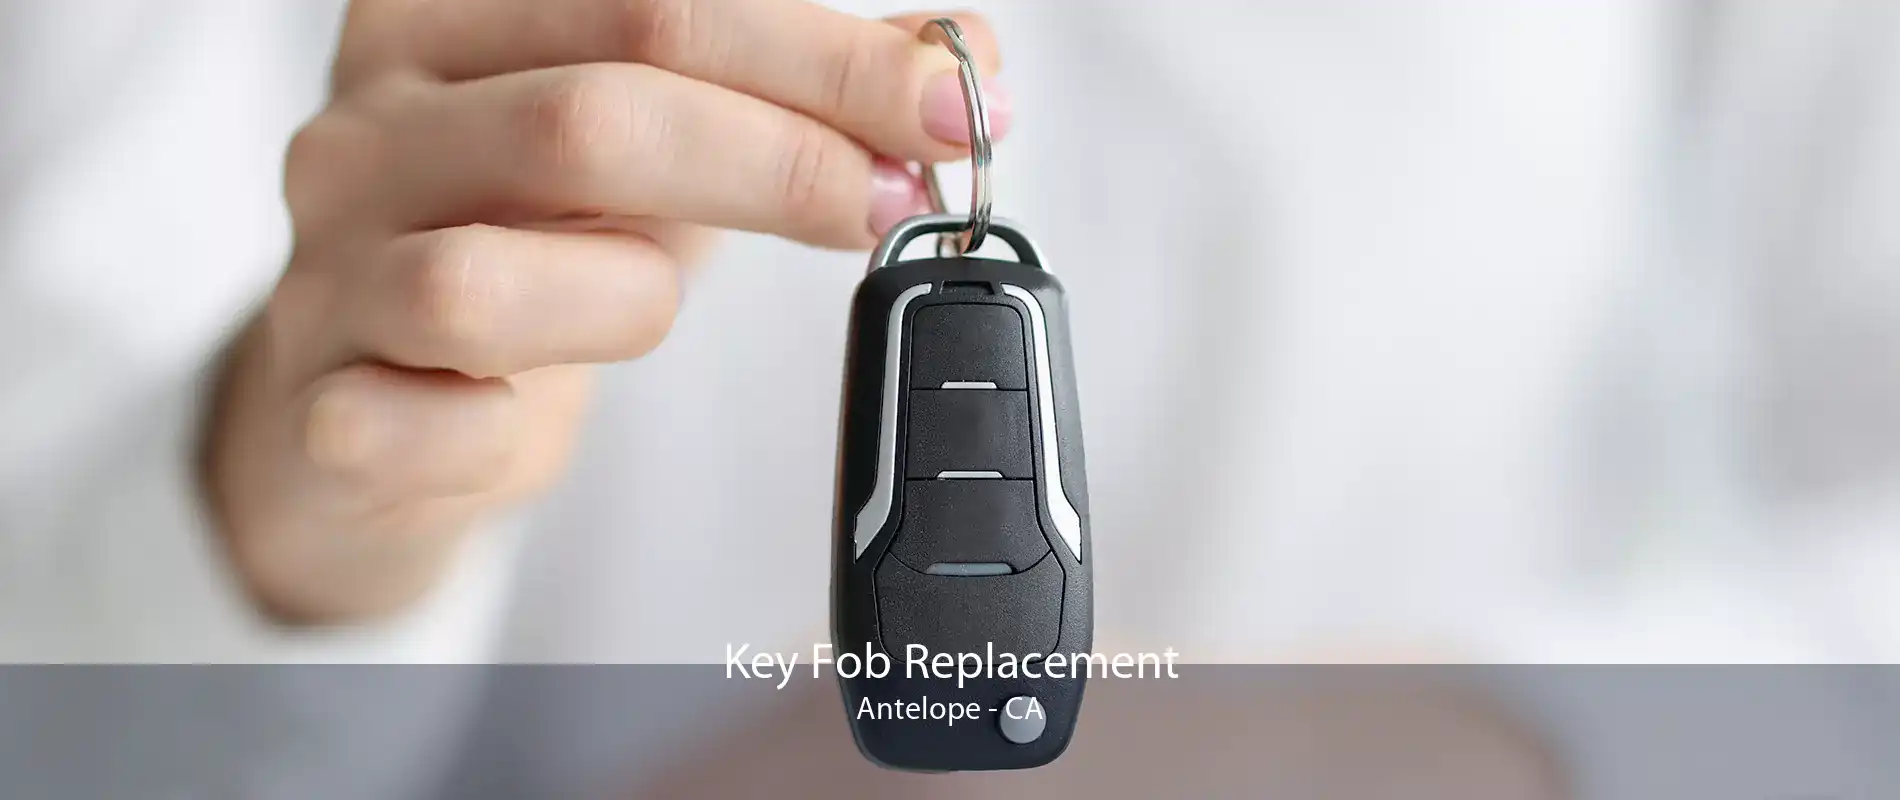 Key Fob Replacement Antelope - CA